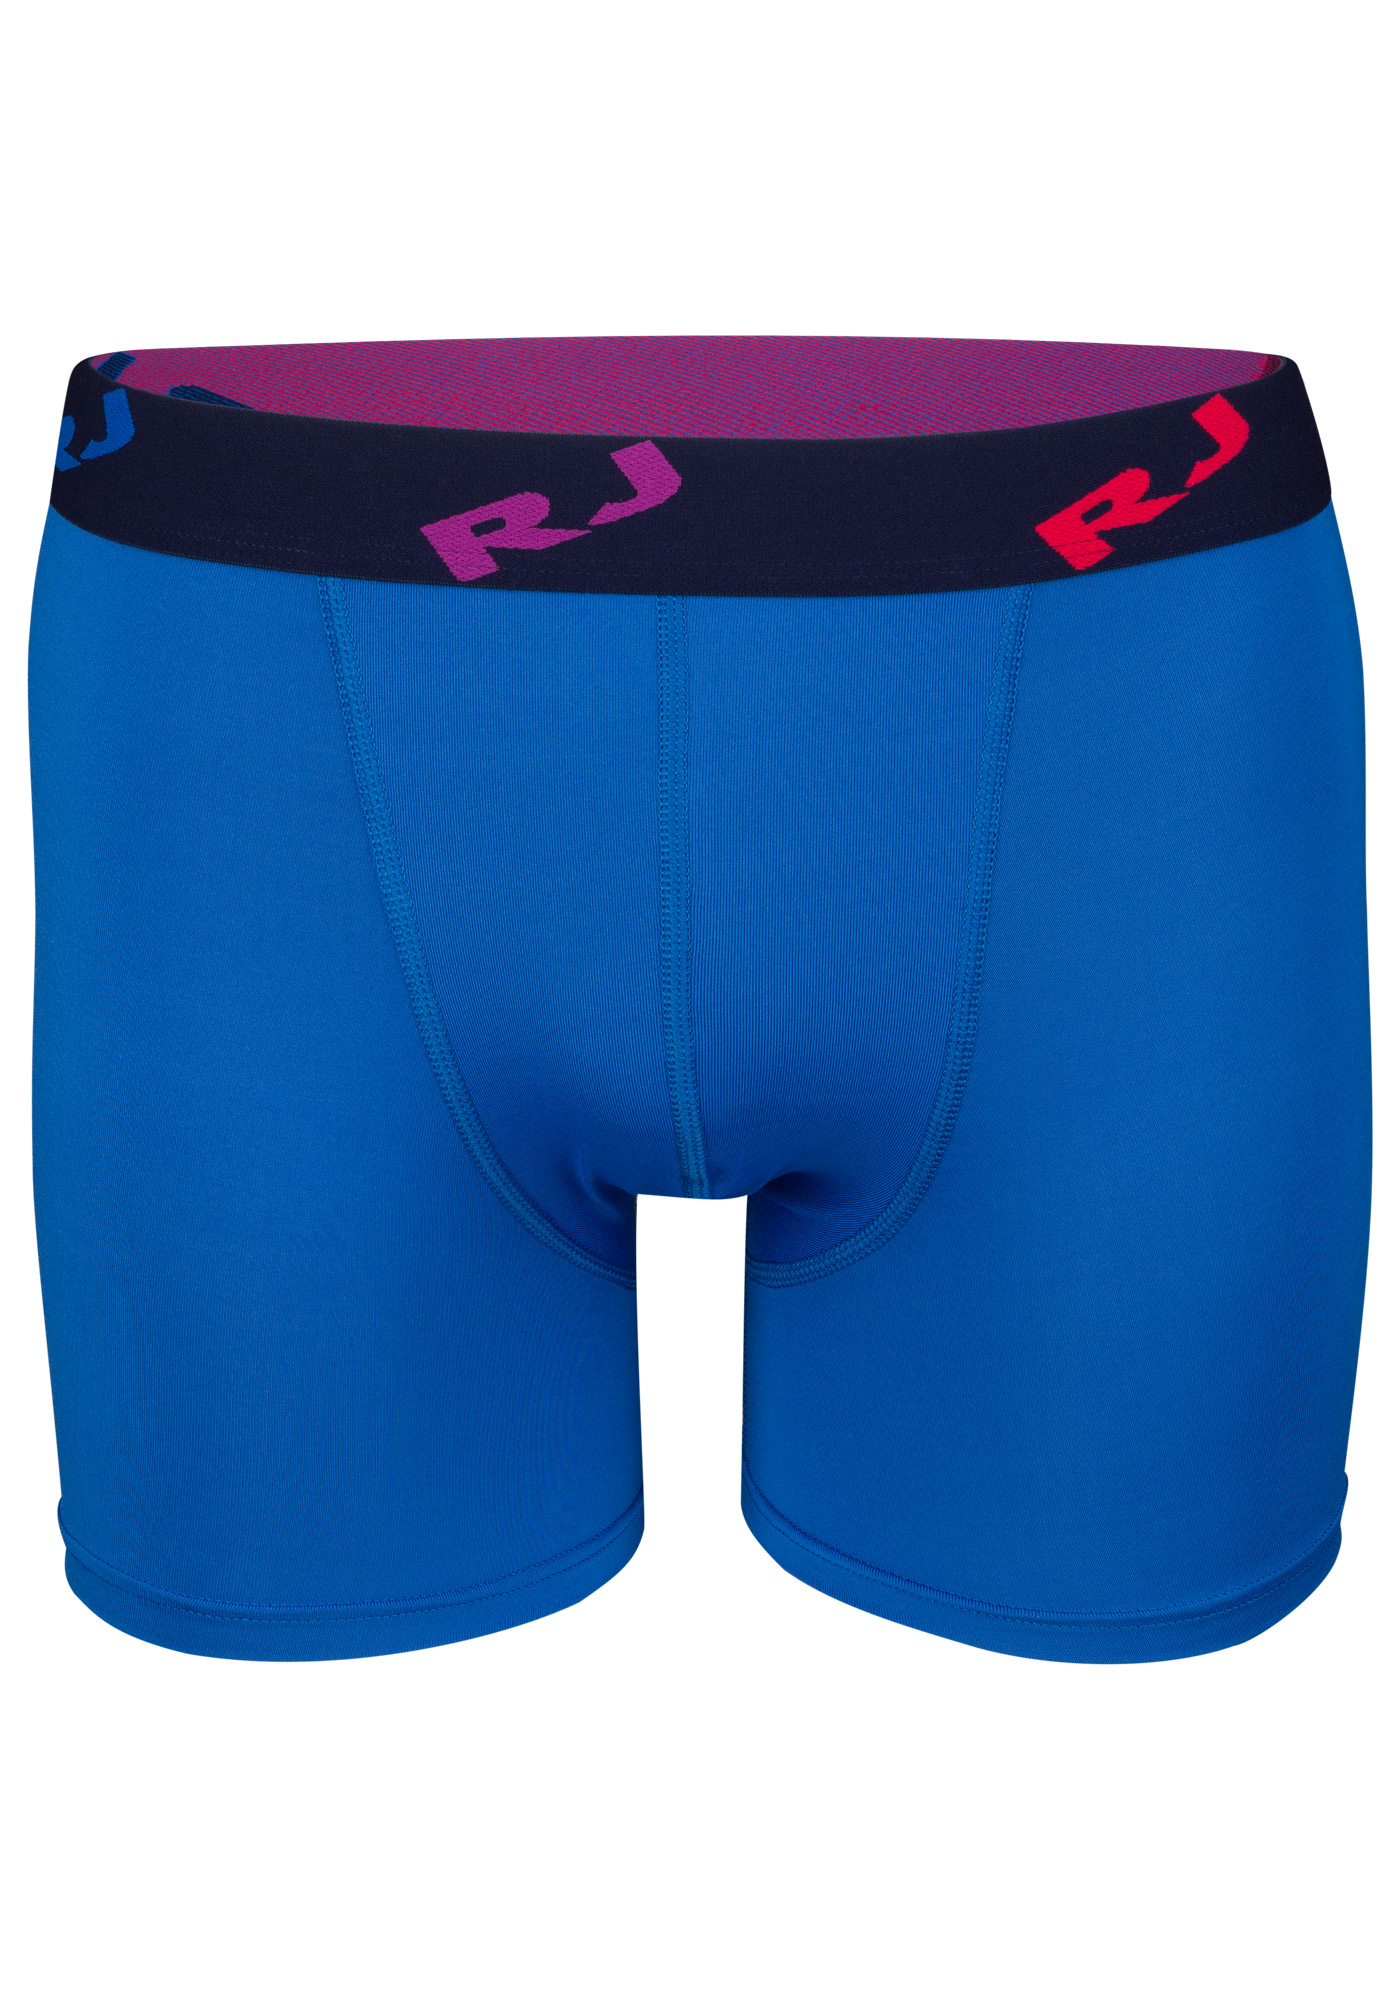 RJ Bodywear Pure Color boxershort (1-pack), heren boxer normale lengte, microfiber, blauw